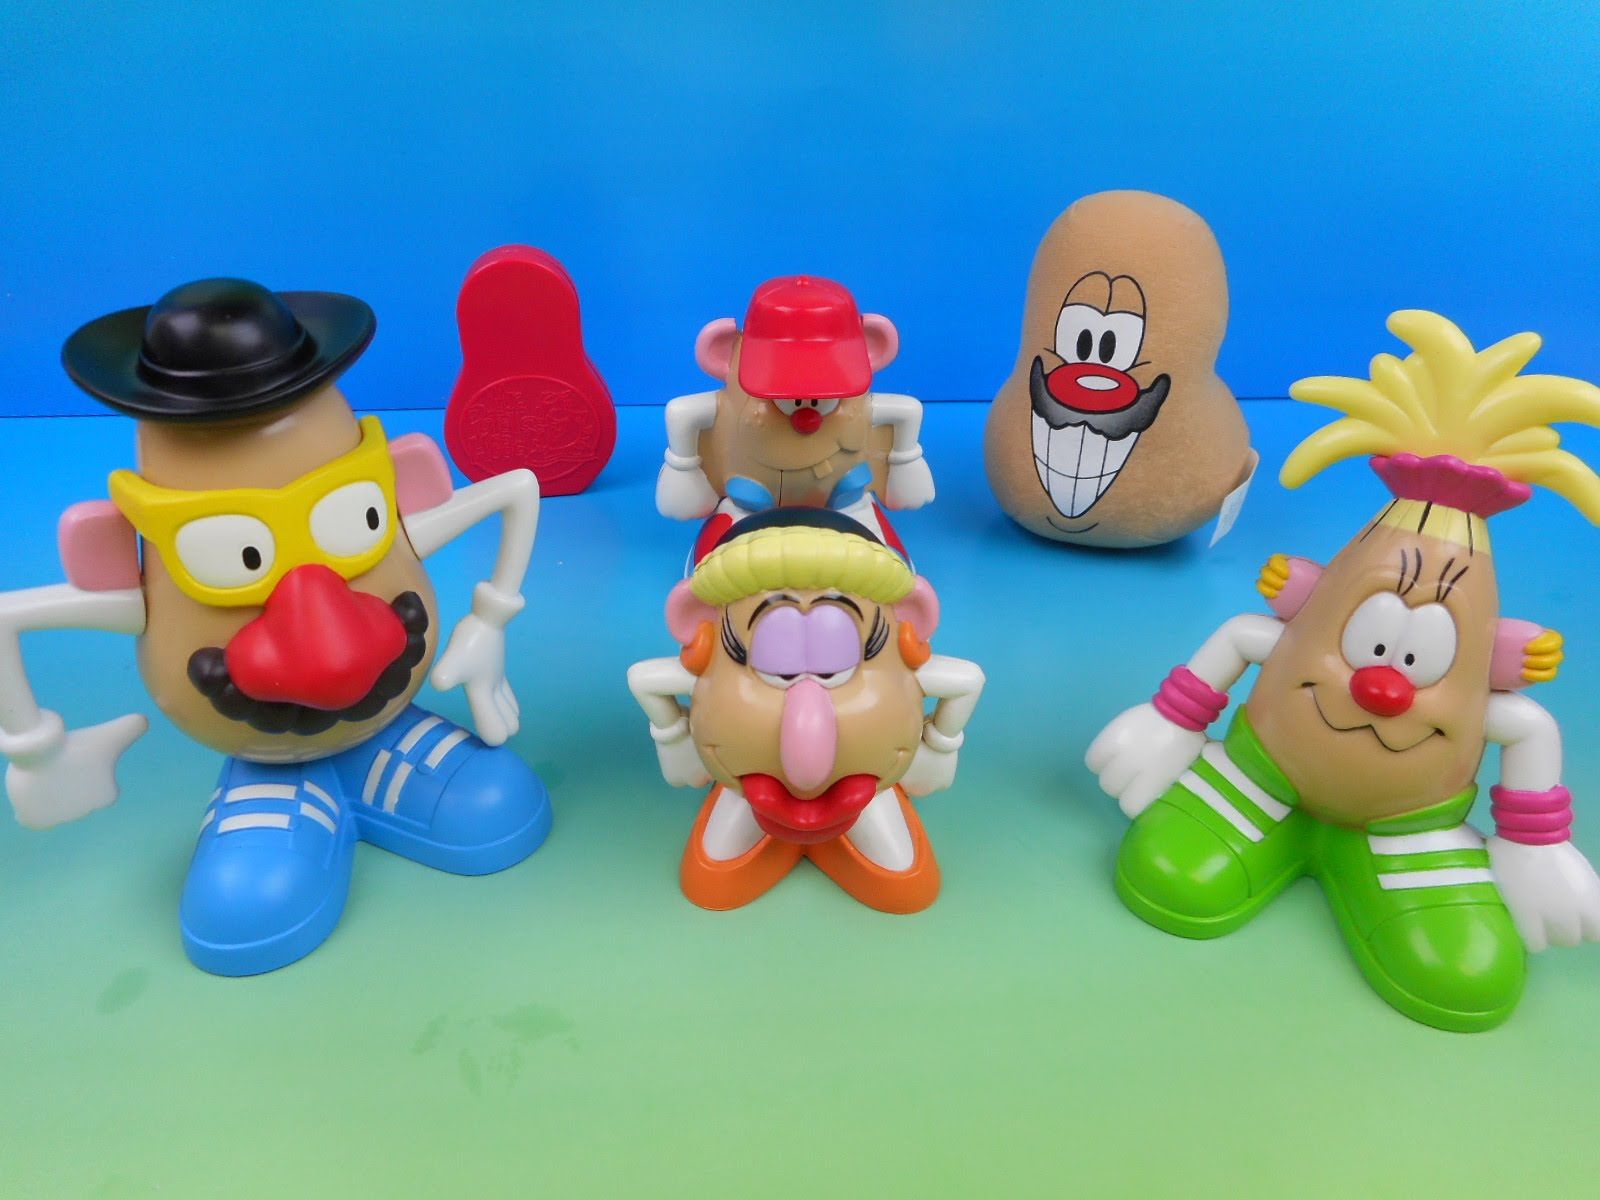 Mr. Potato Head McDonald's Toy